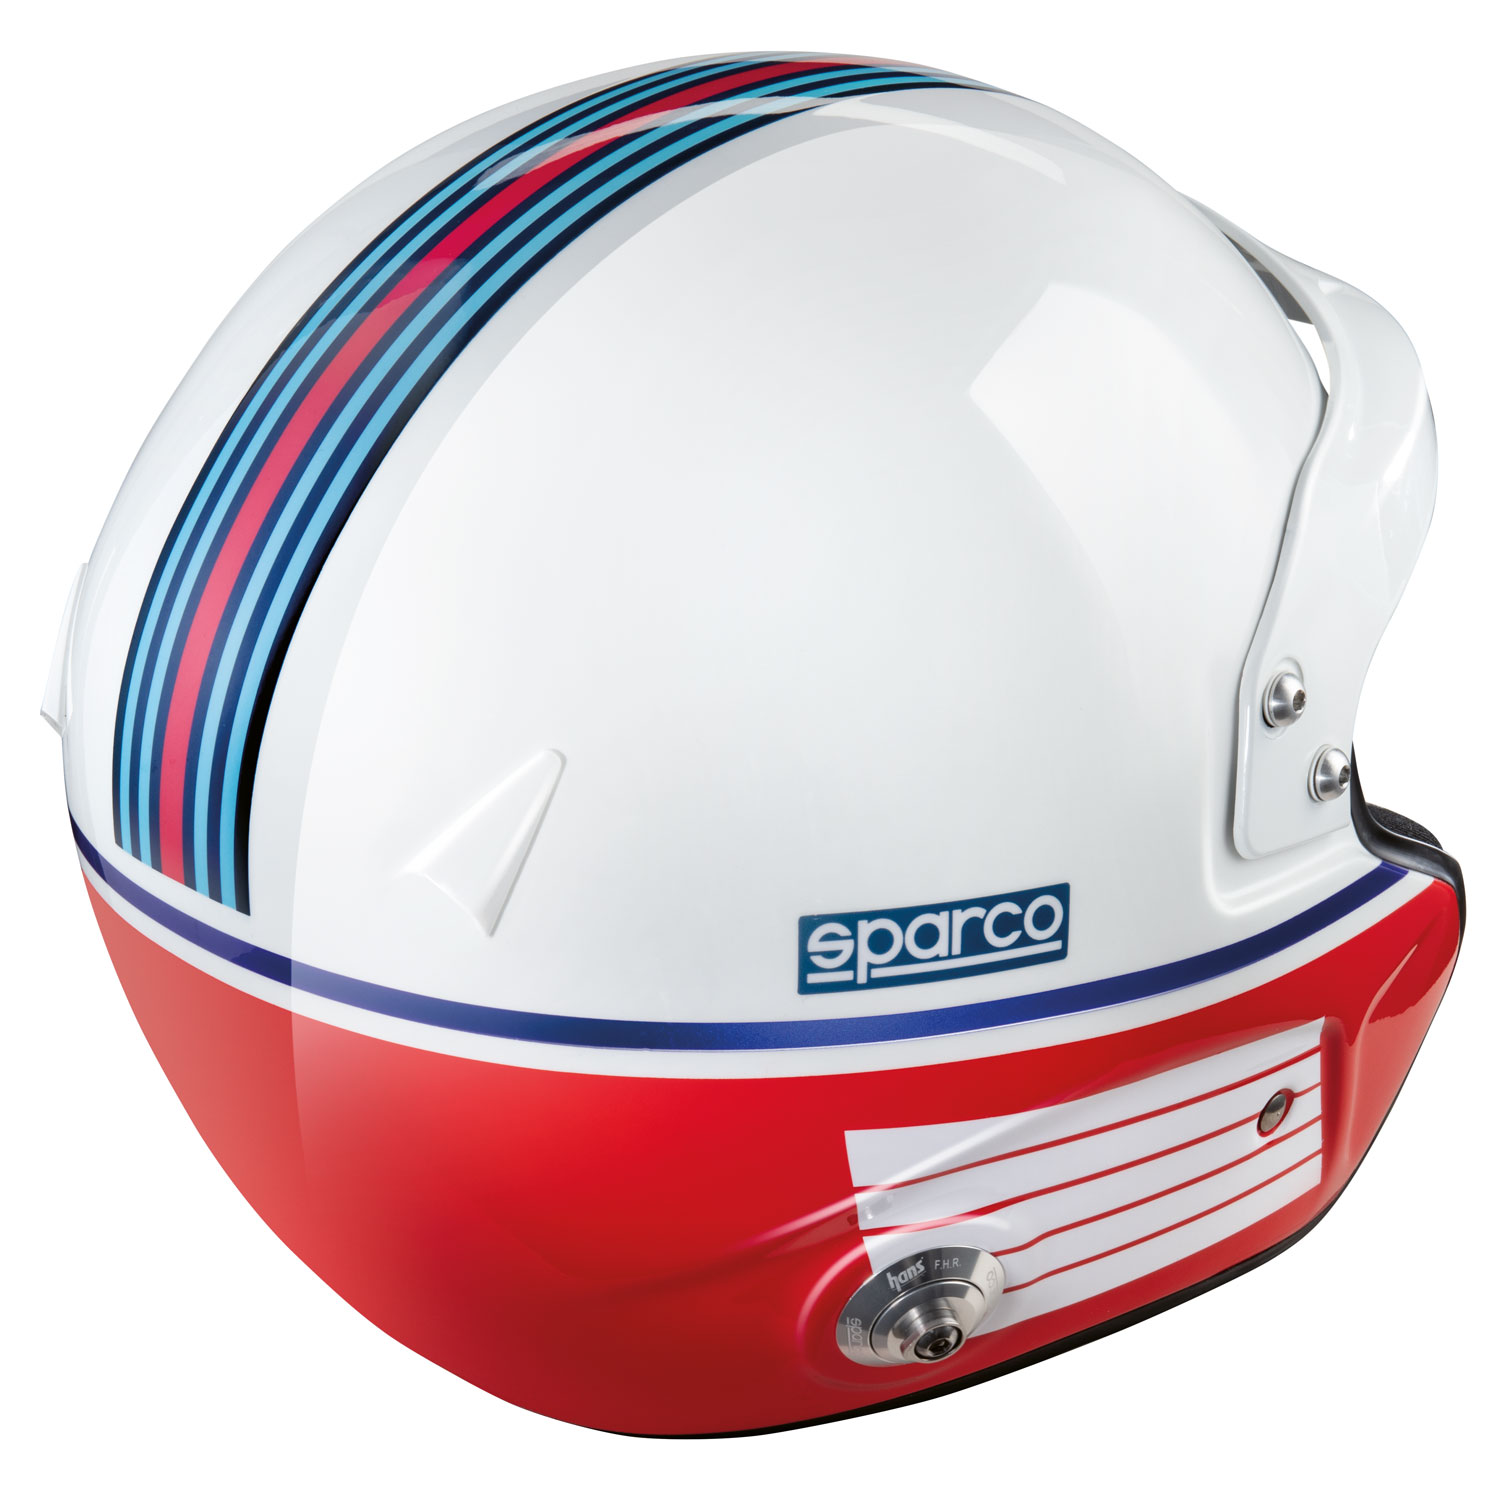 Sparco Helm Martini Racing (Streifen-Design)